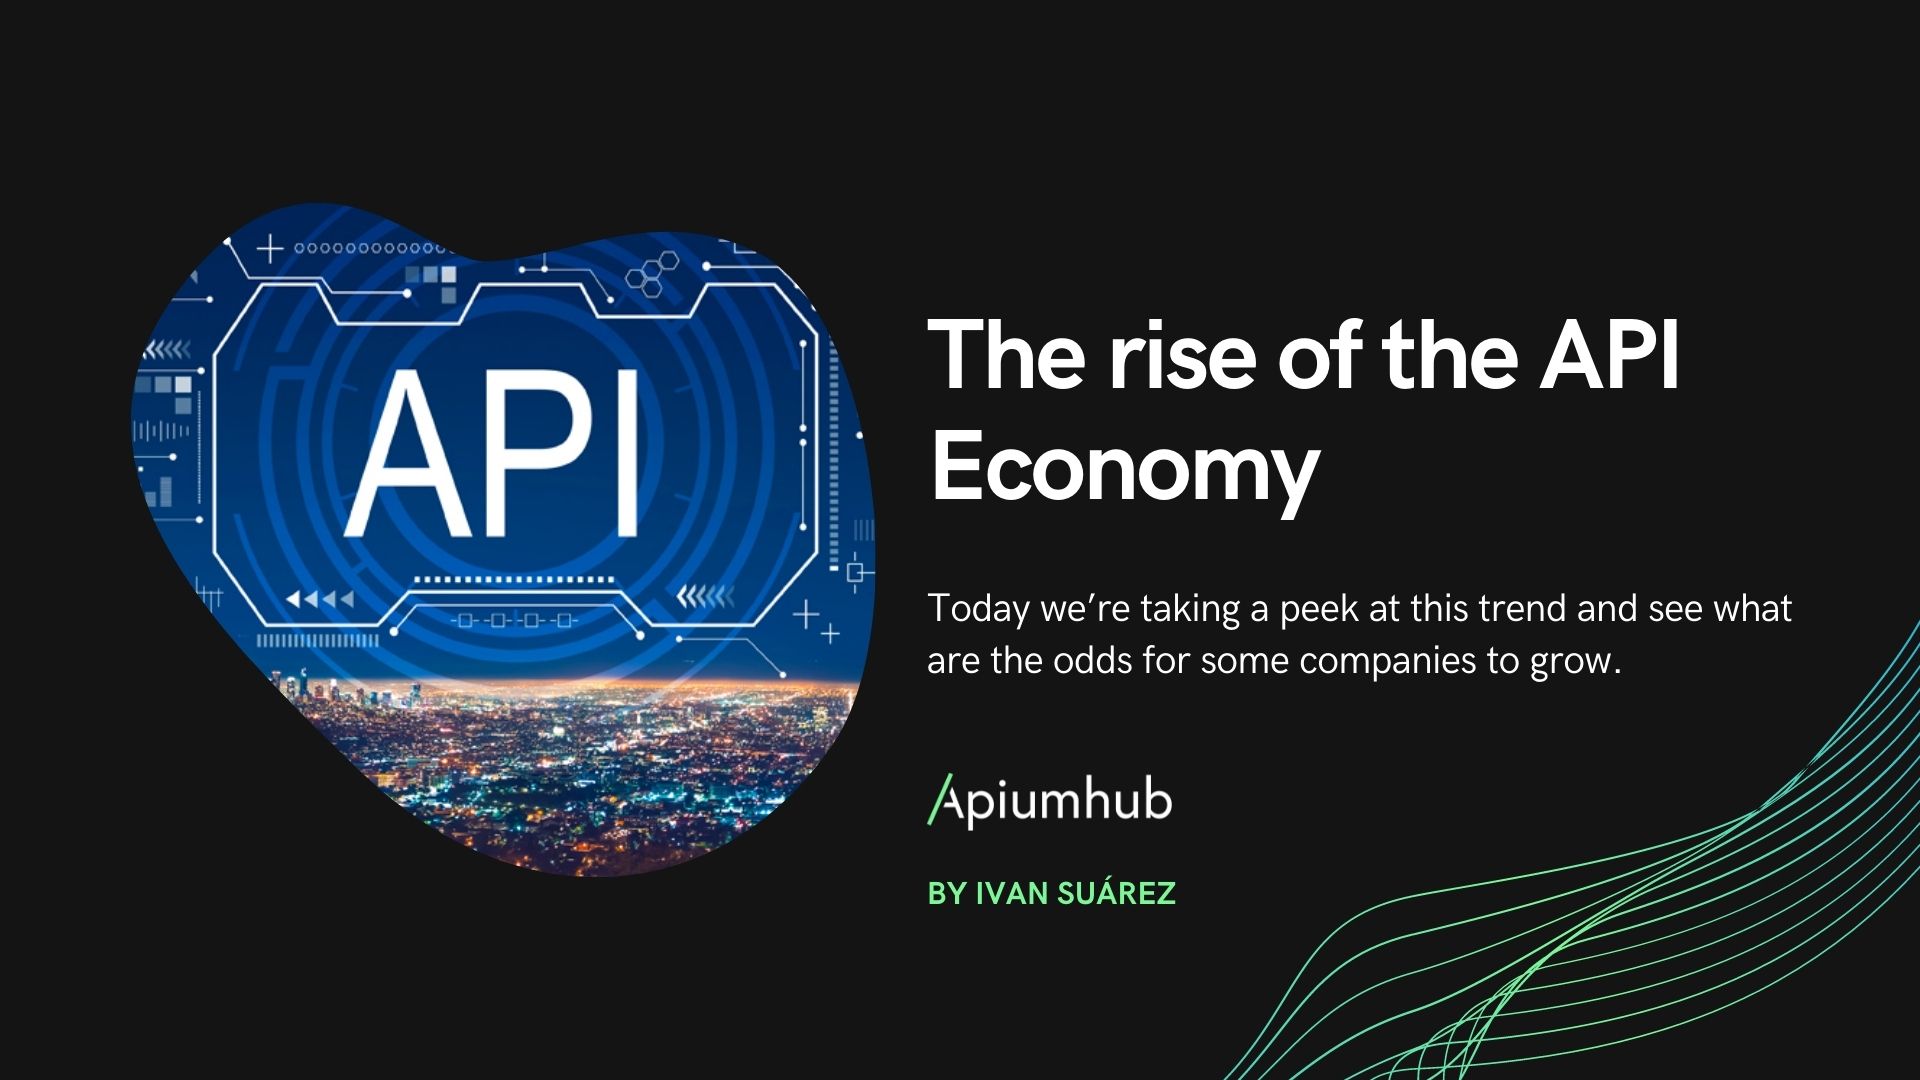 The rise of the API Economy